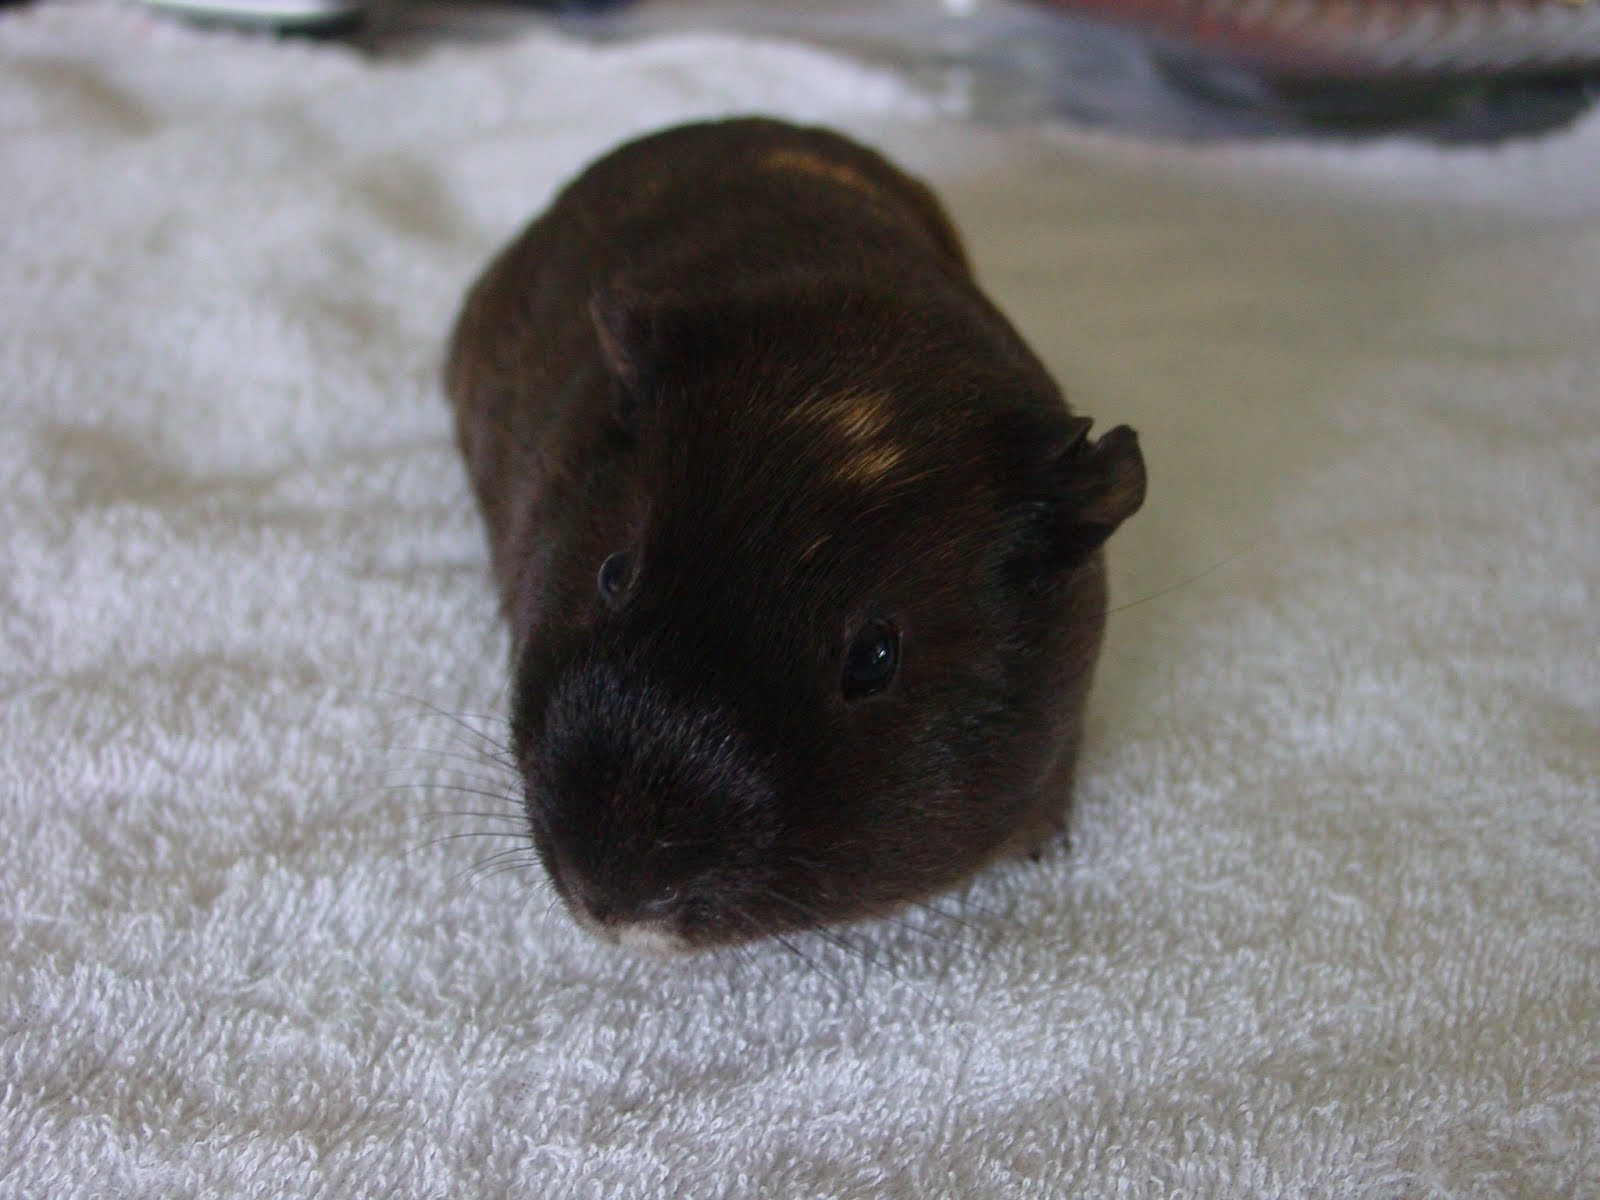 My guinea pig "Cheryl"